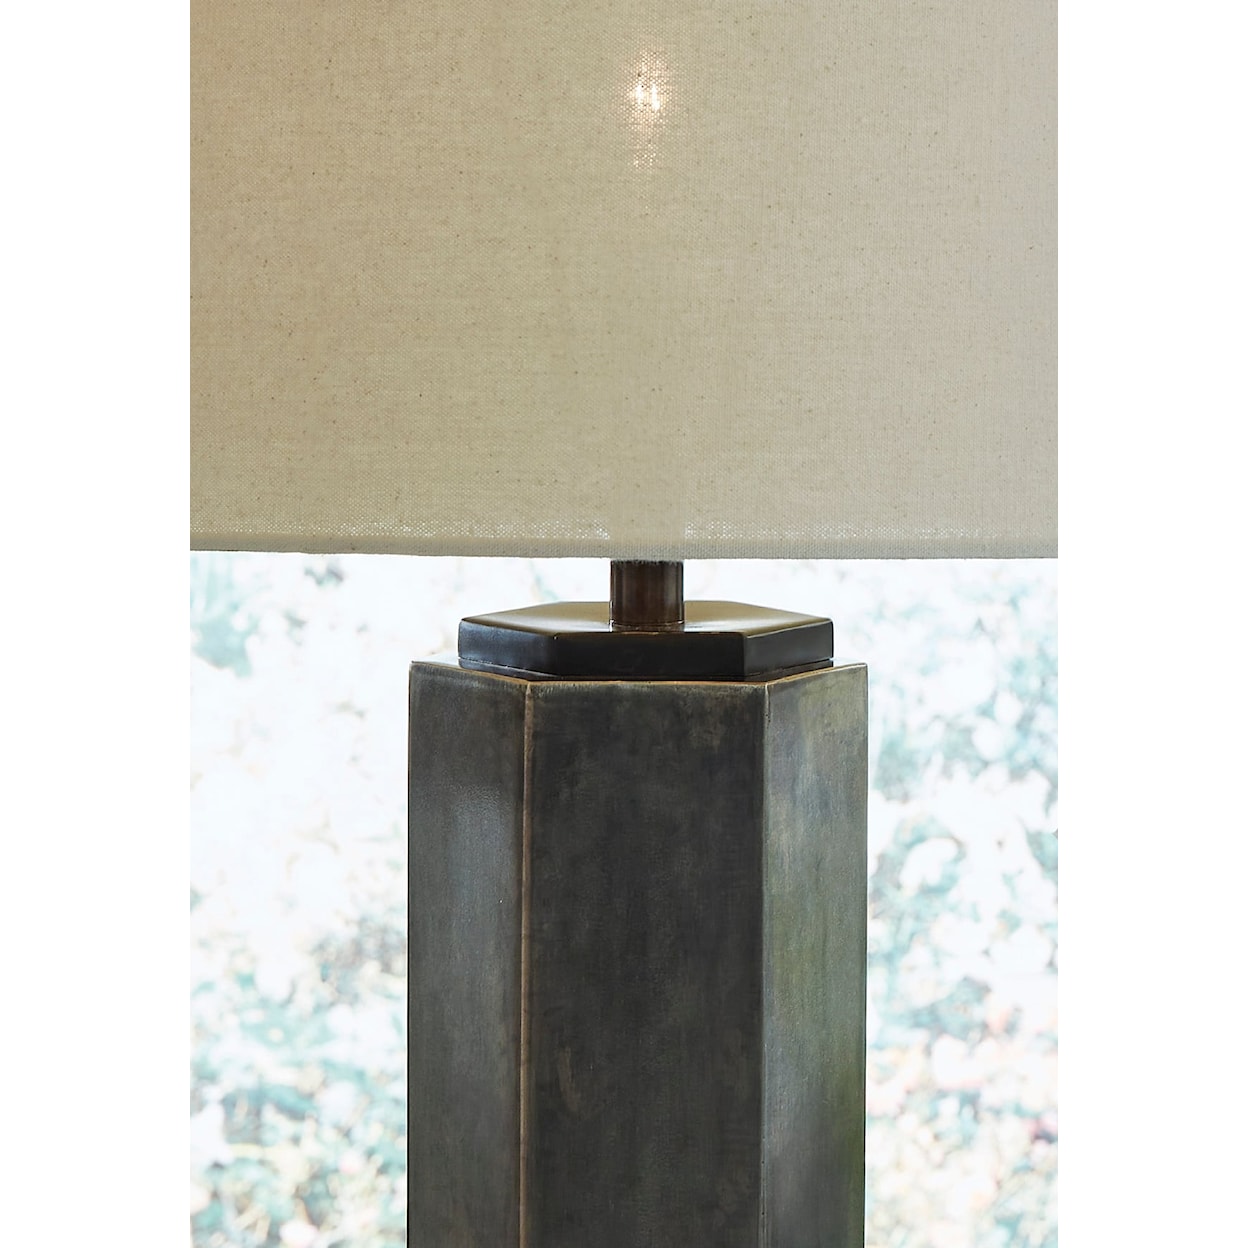 Signature Design Lamps - Contemporary Dirkton Table Lamp